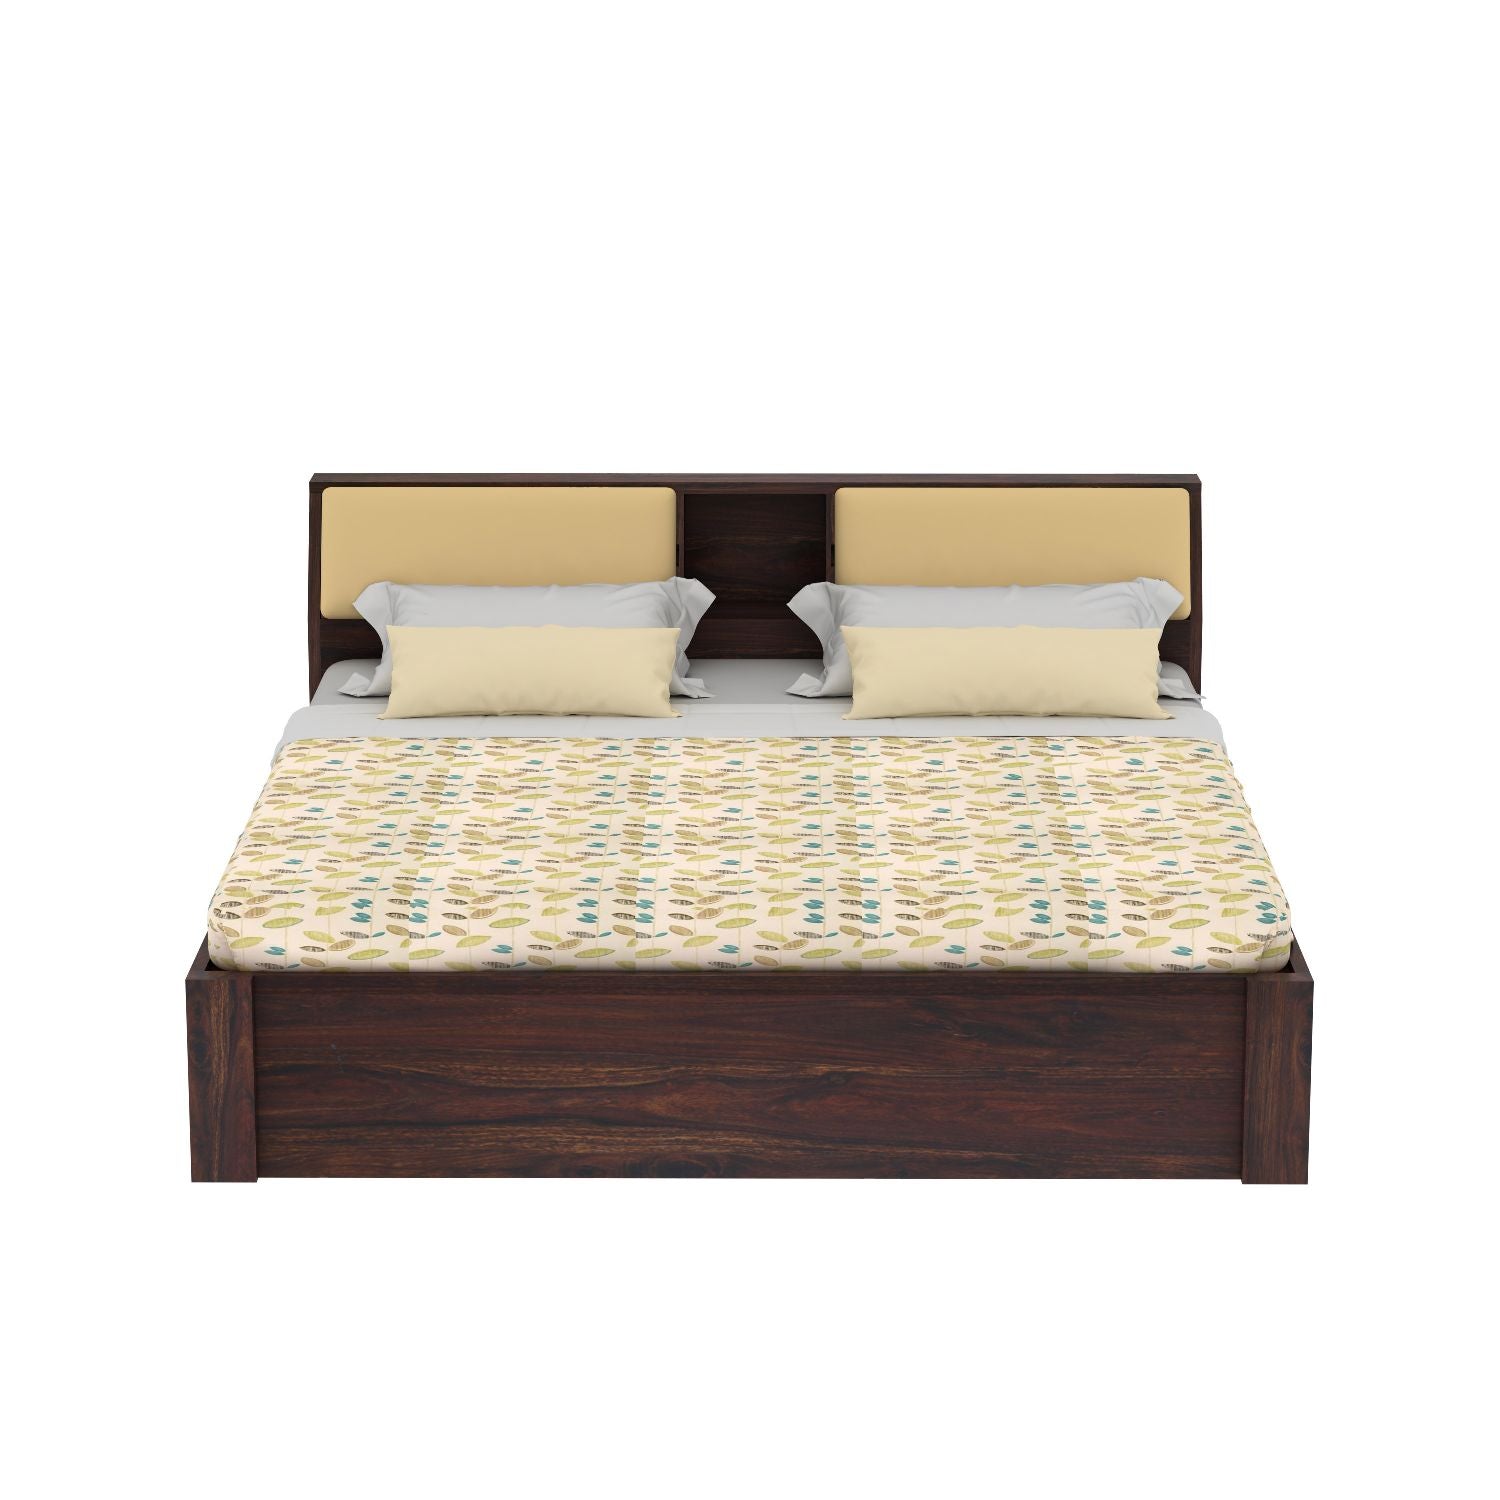 Rubikk Solid Sheesham Wood Bed With Two Drawers (King Size, Walnut Finish)